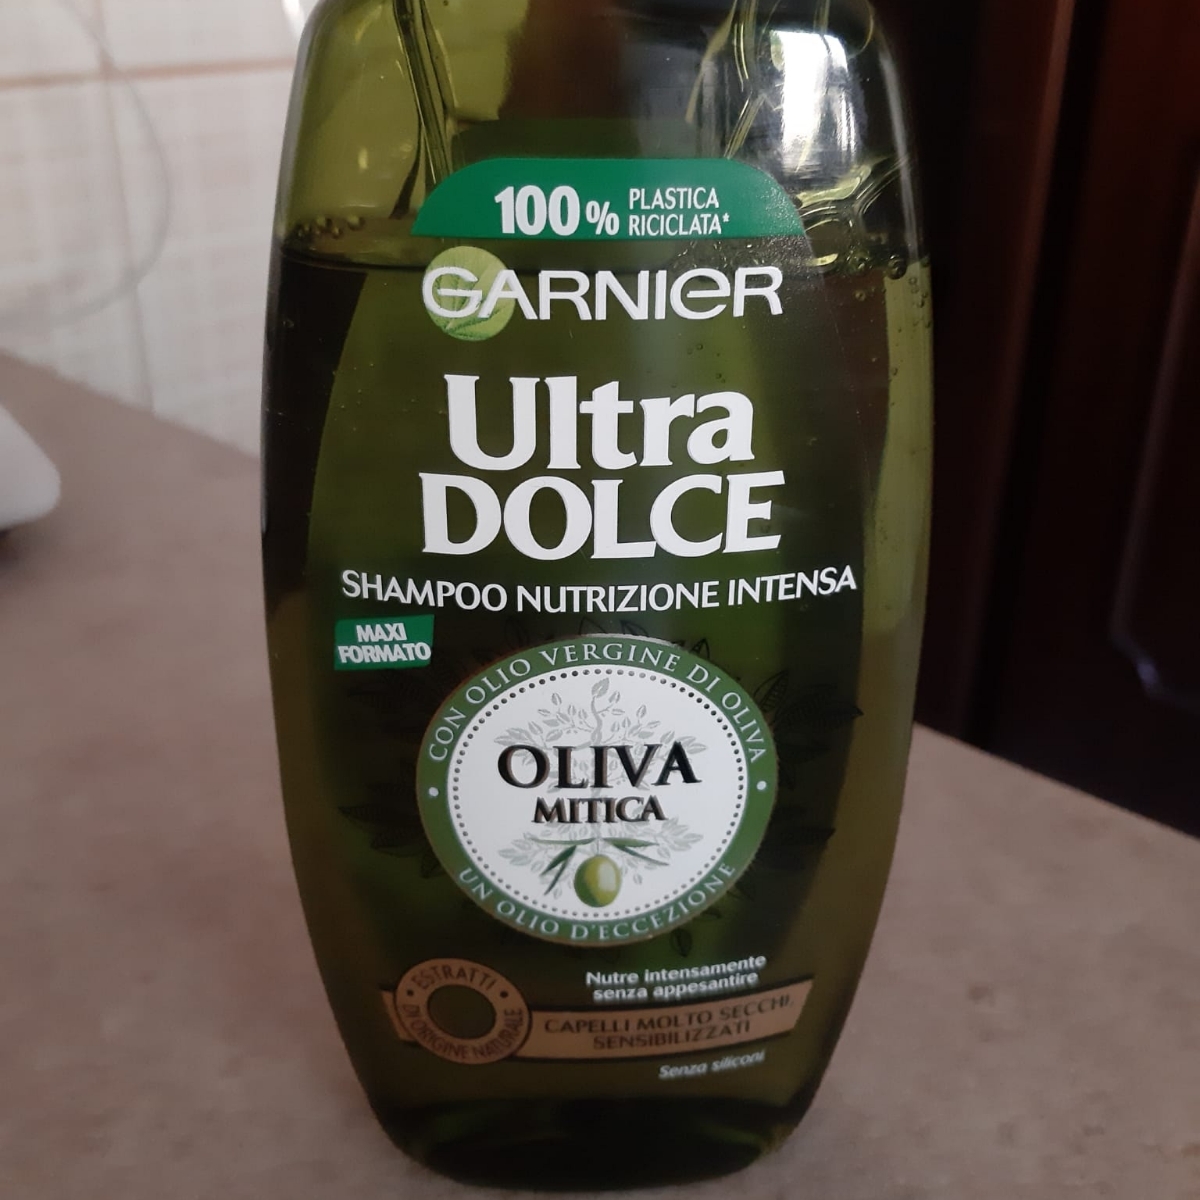 Garnier Shampoo nutrizione intensa. Olivia mitica Reviews | abillion